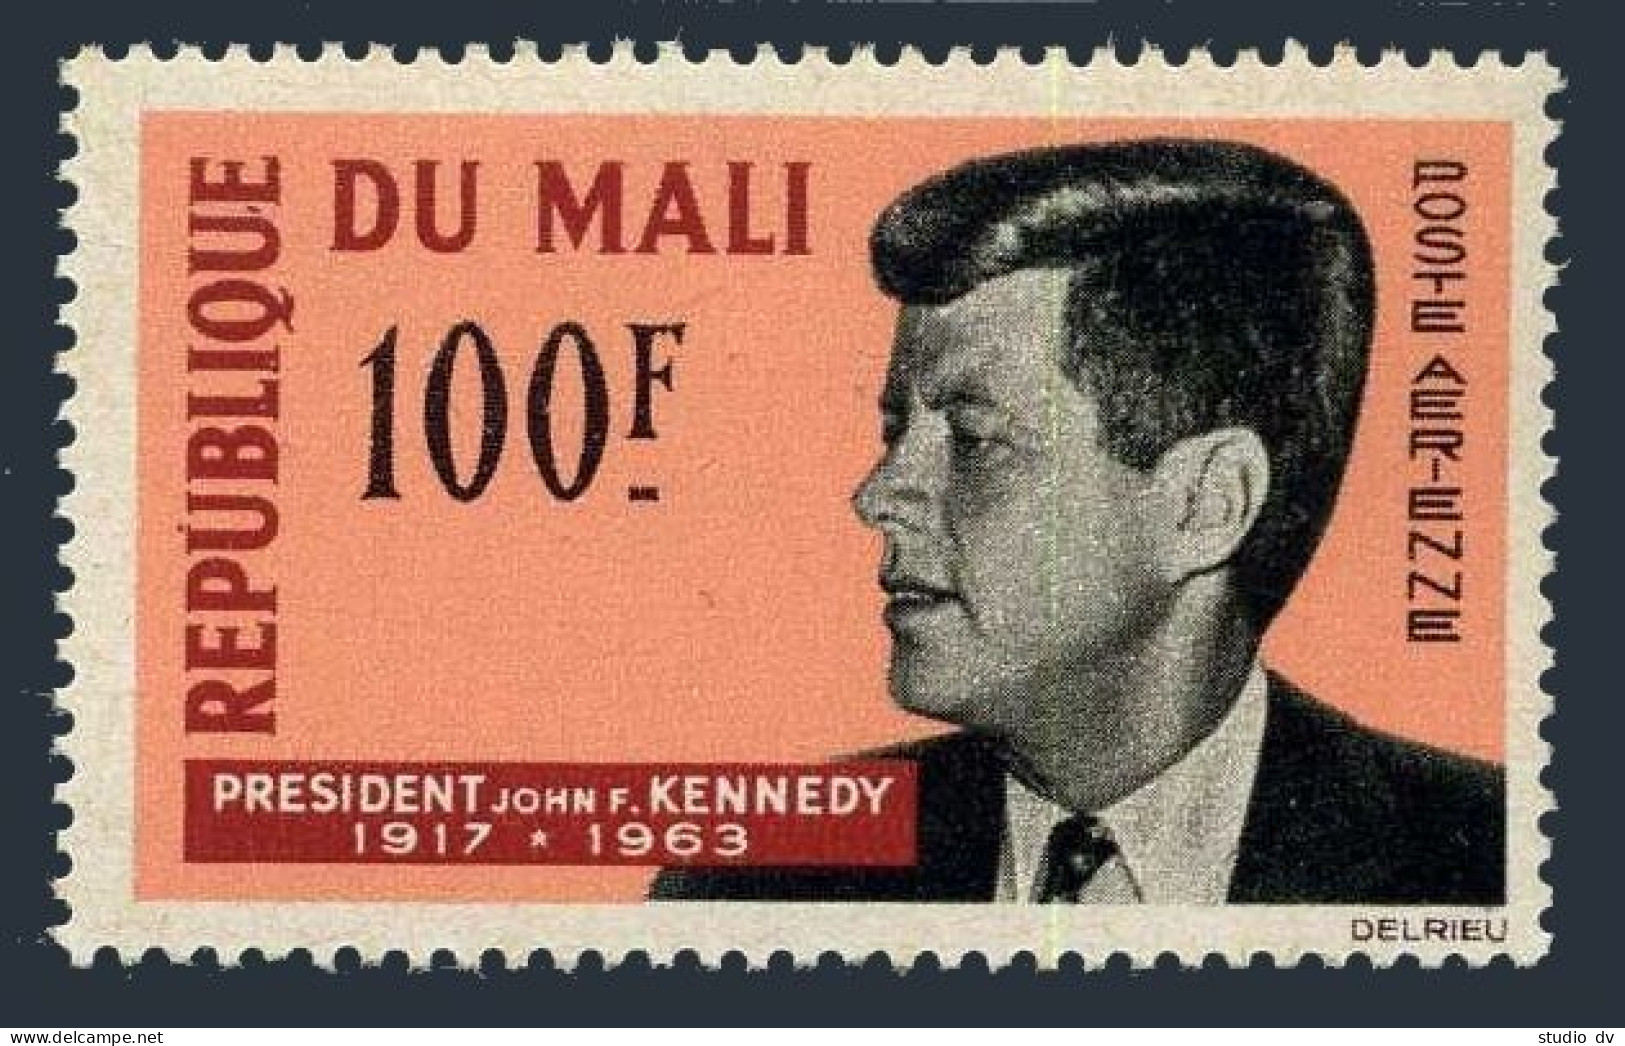 Mali C24, MNH. Michel 91. President John F. Kennedy, 1917-1963. 1964. - Mali (1959-...)